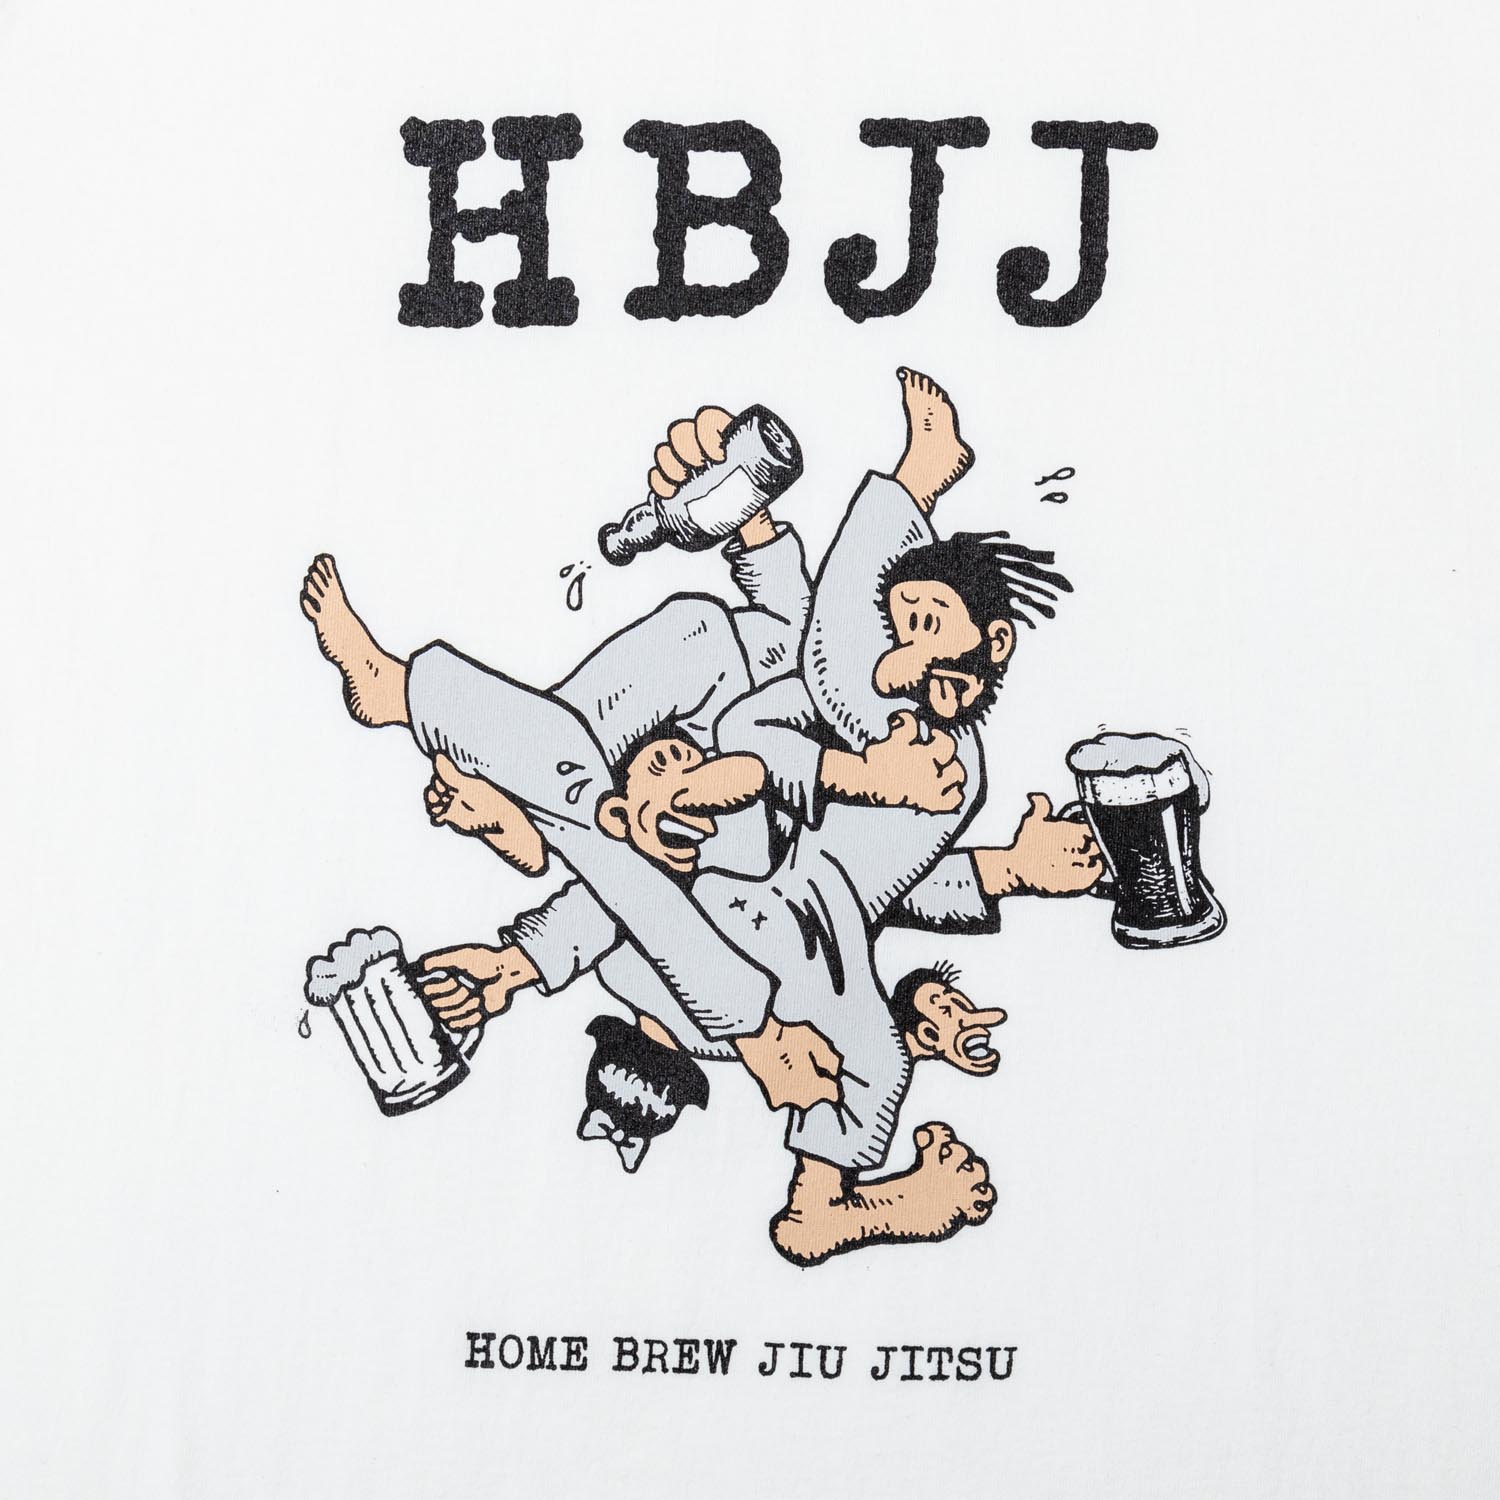 HBJJ aka HOME BREW JIU JITSU (LS) designed by Jerry UKAI